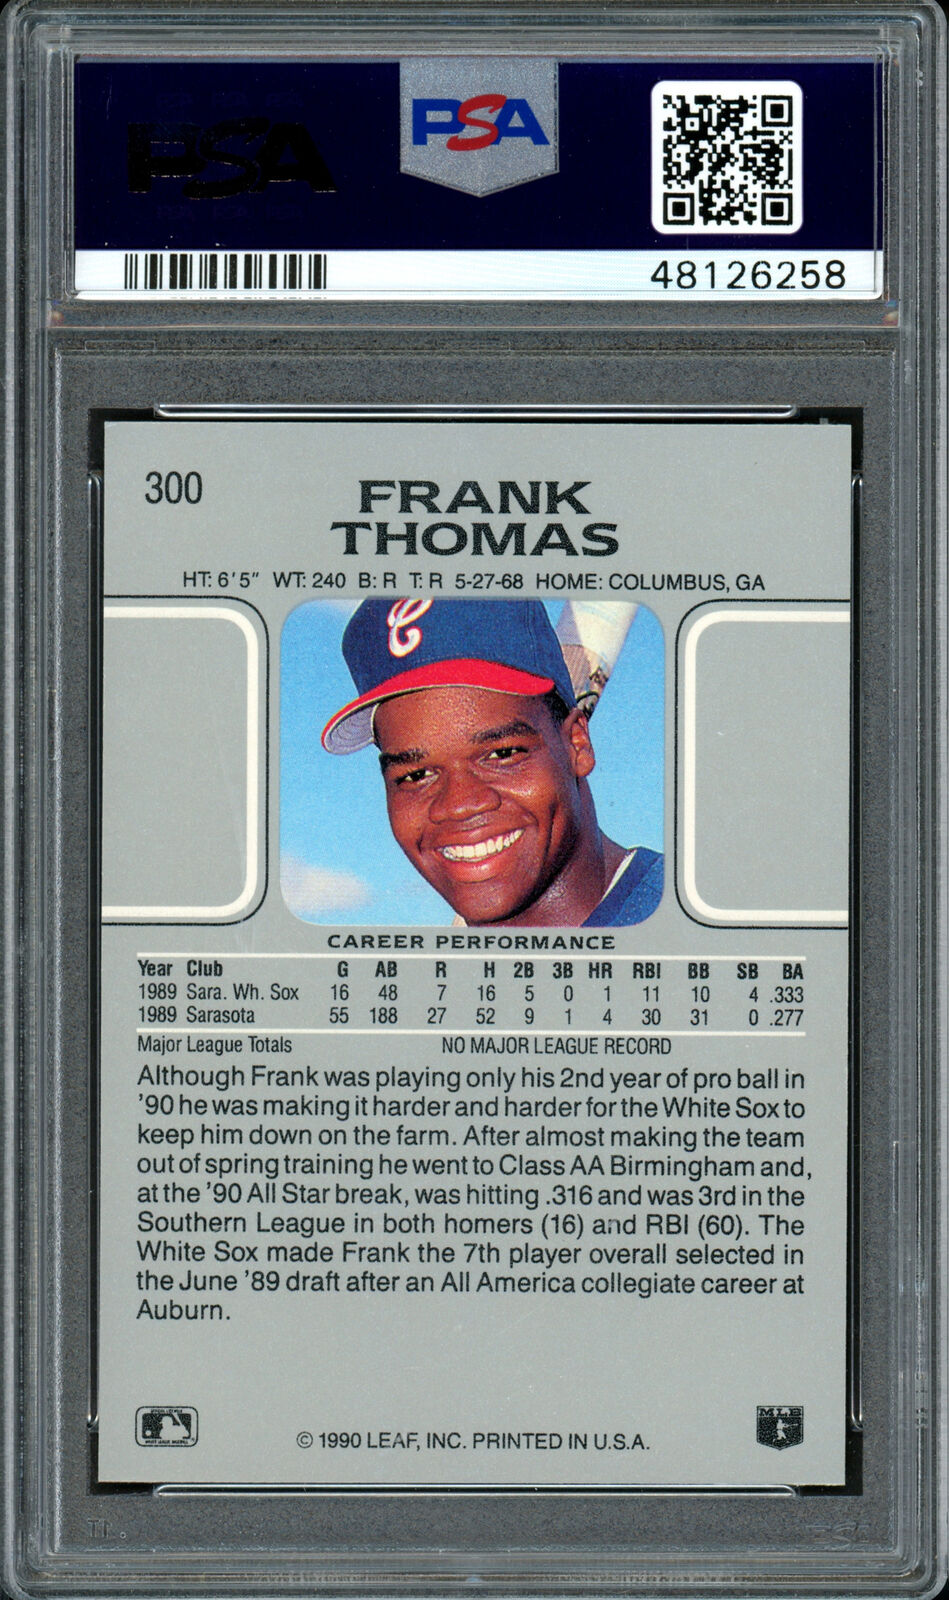 Frank Thomas 1990 Leaf Rookie Card Auto Grade 9 Gem-MT 10 PSA/DNA 48126258 Image 3